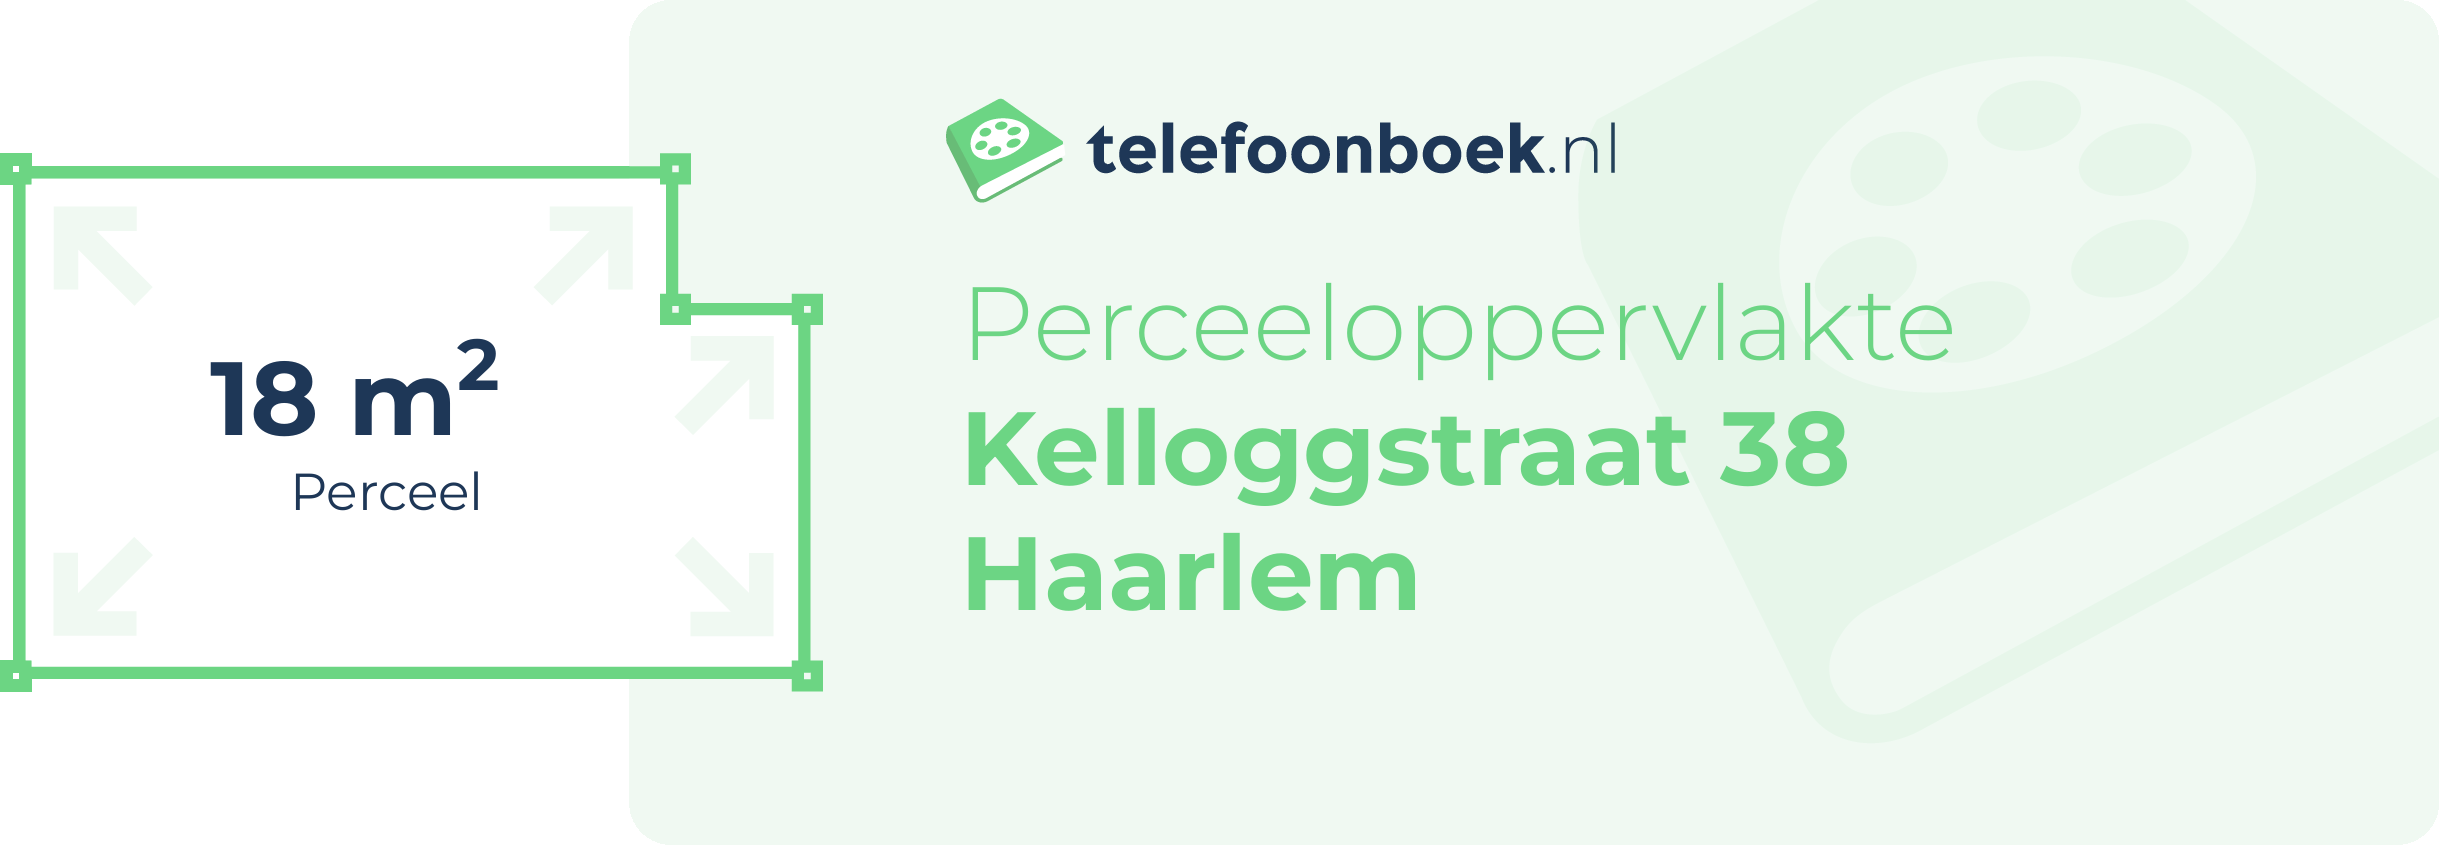 Perceeloppervlakte Kelloggstraat 38 Haarlem